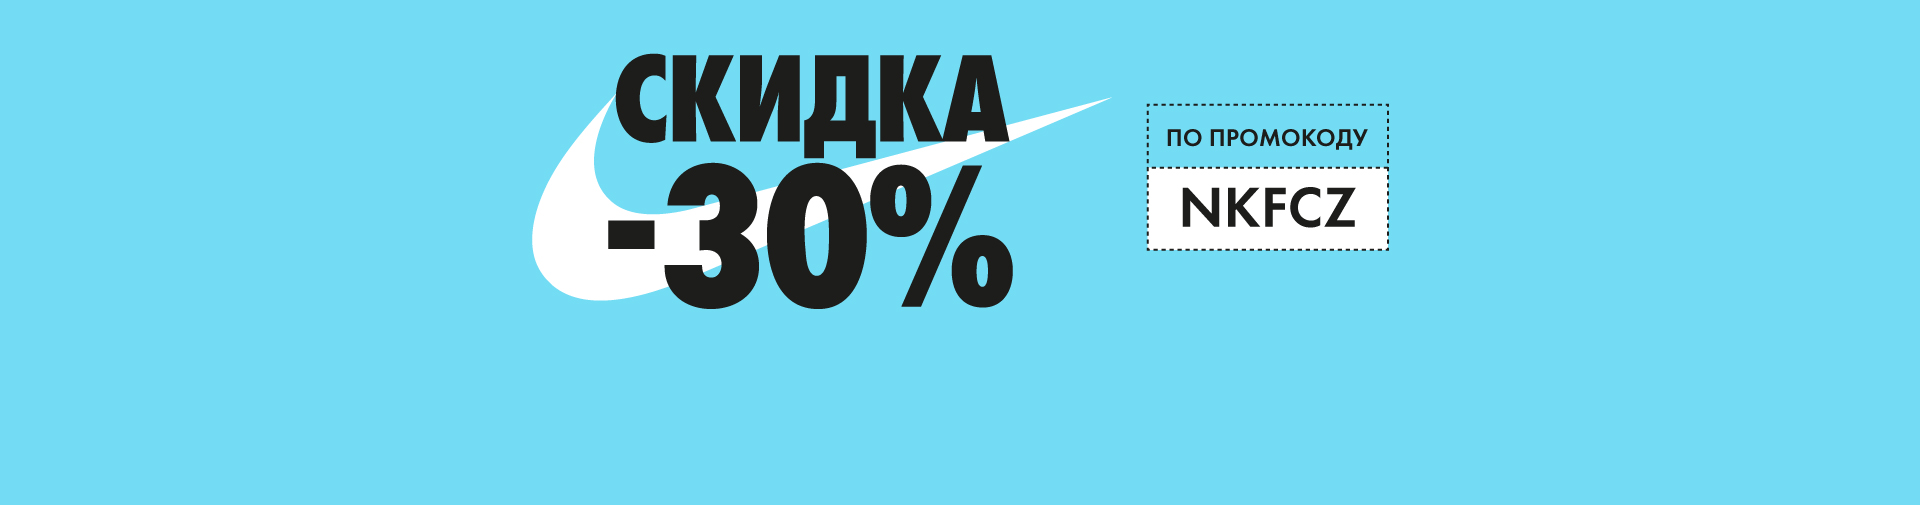 Скидка 30% на товары Nike